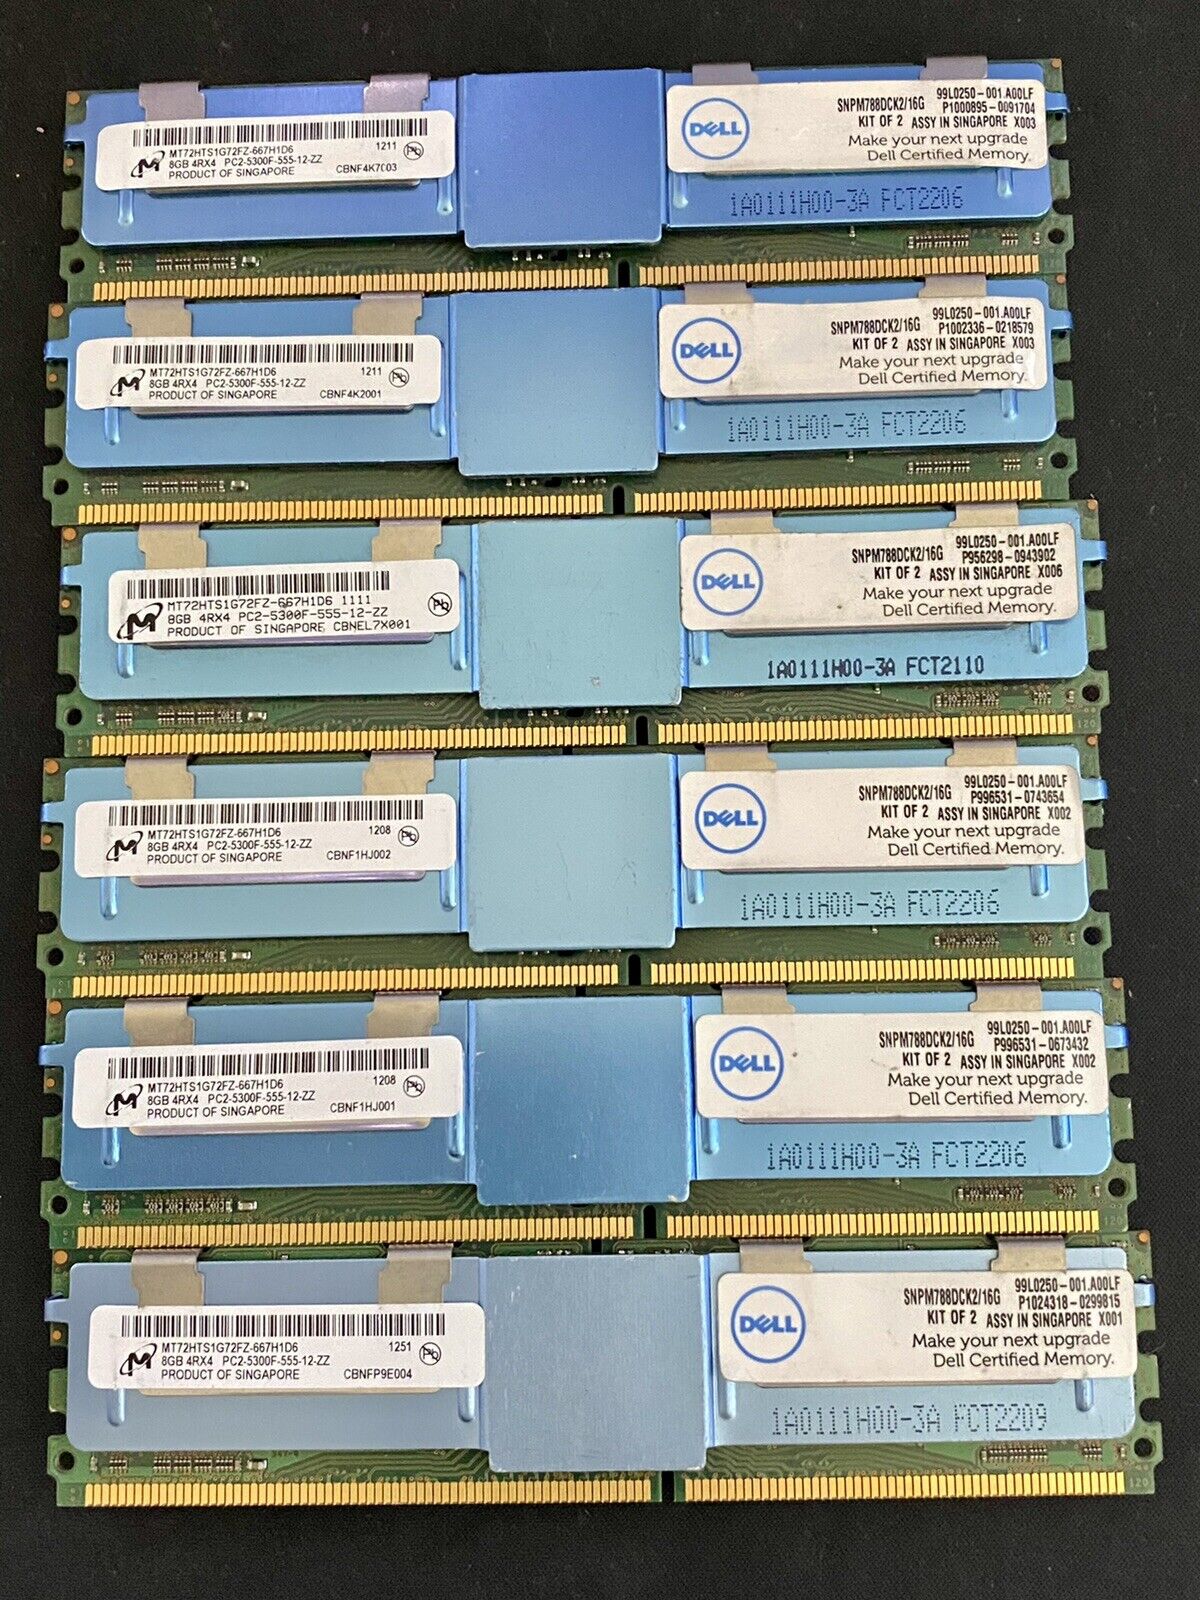 Dell Server Memory 8GB 4Rx4 PC2-5300F Part Number - SNPM788DCK2/16G 